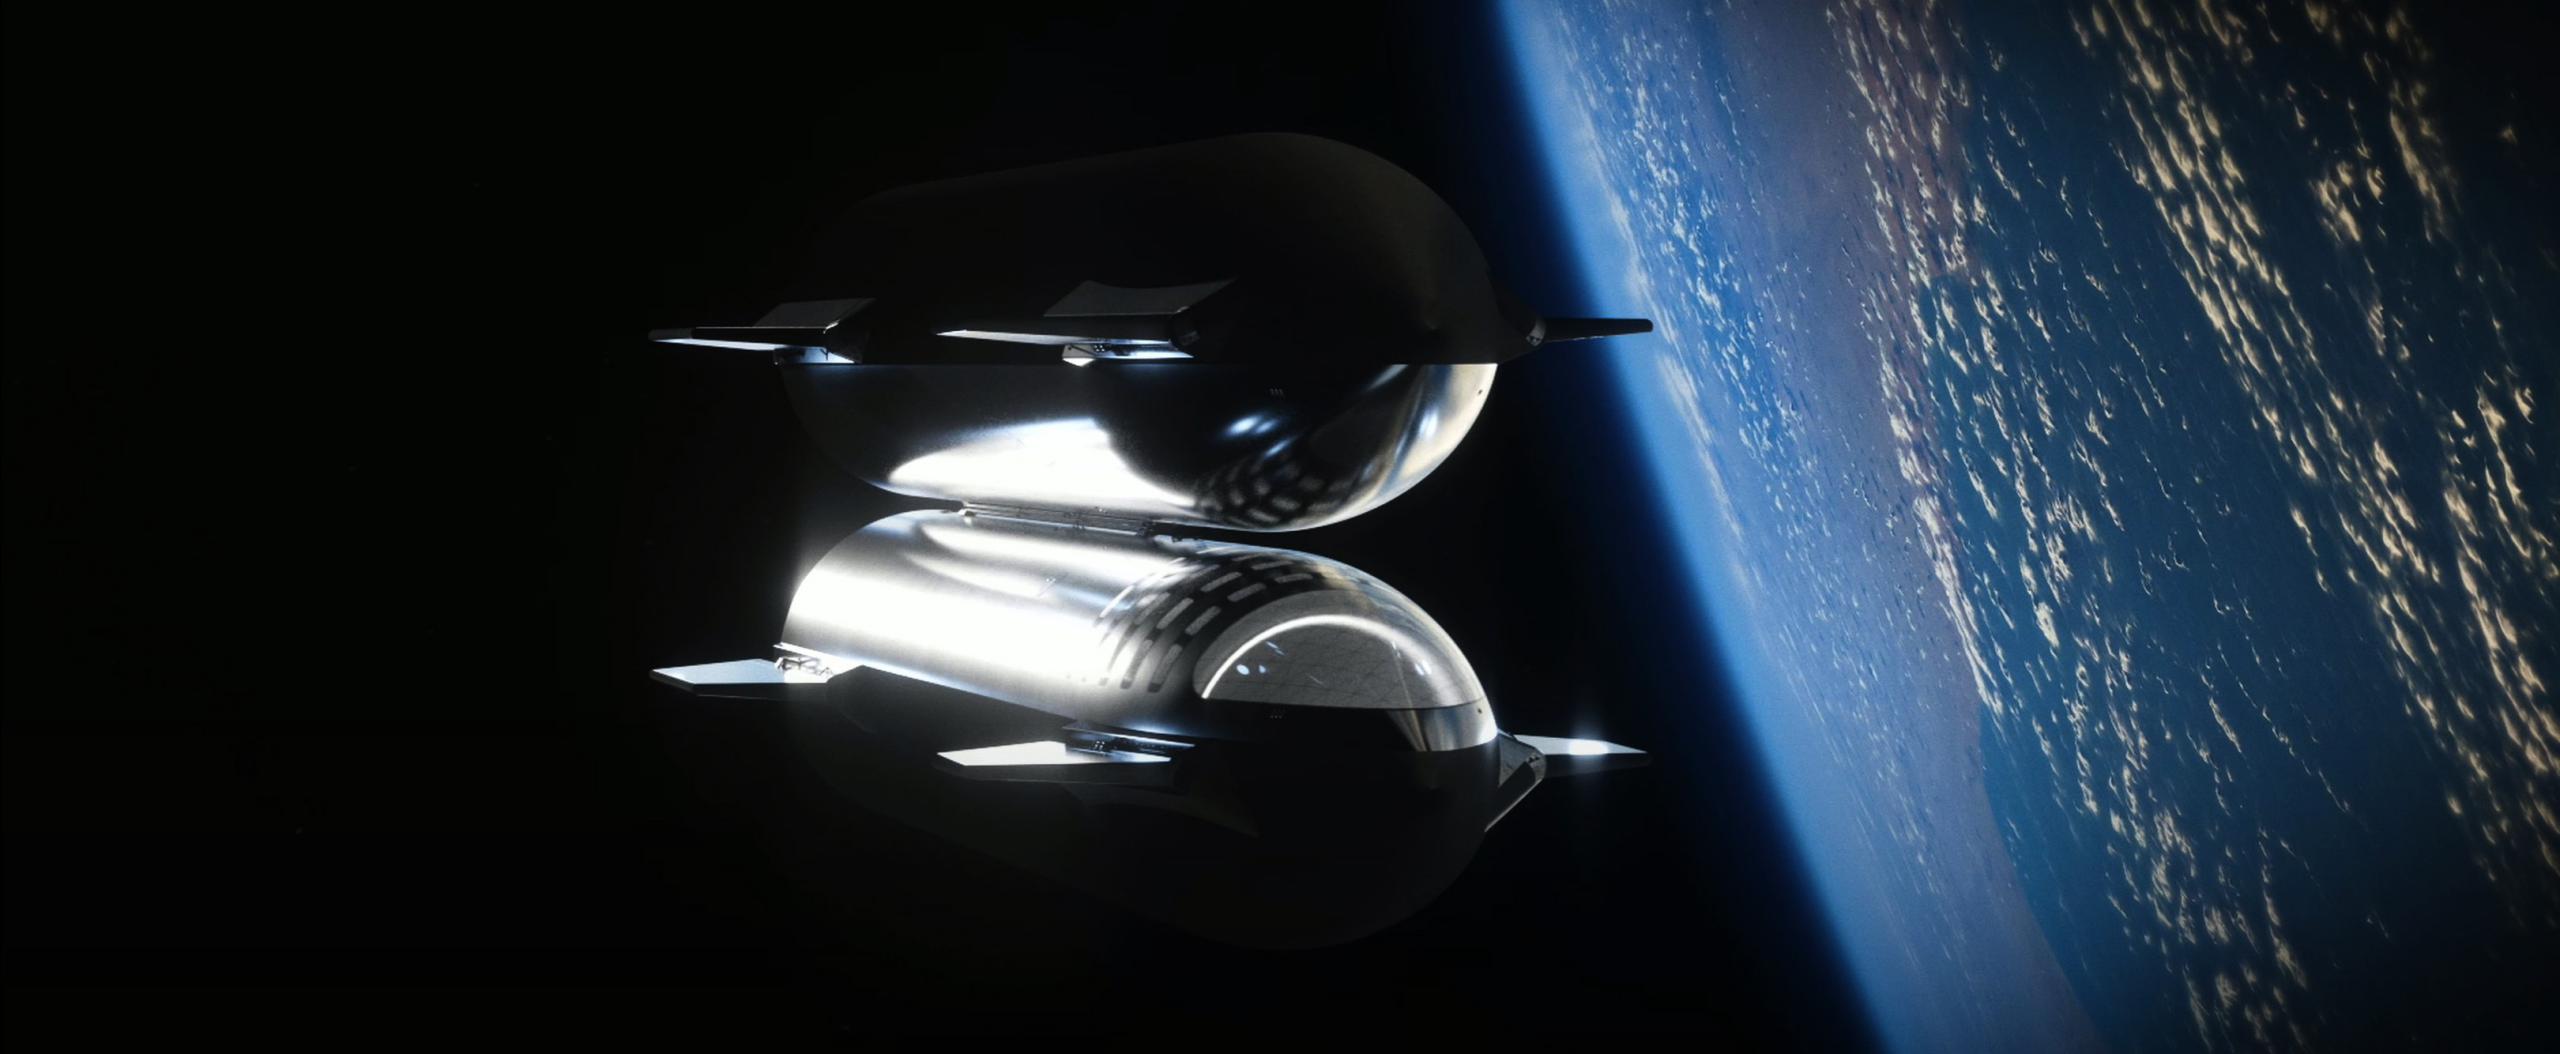 Starship update 2022 (SpaceX) orbital refilling 1 (c)